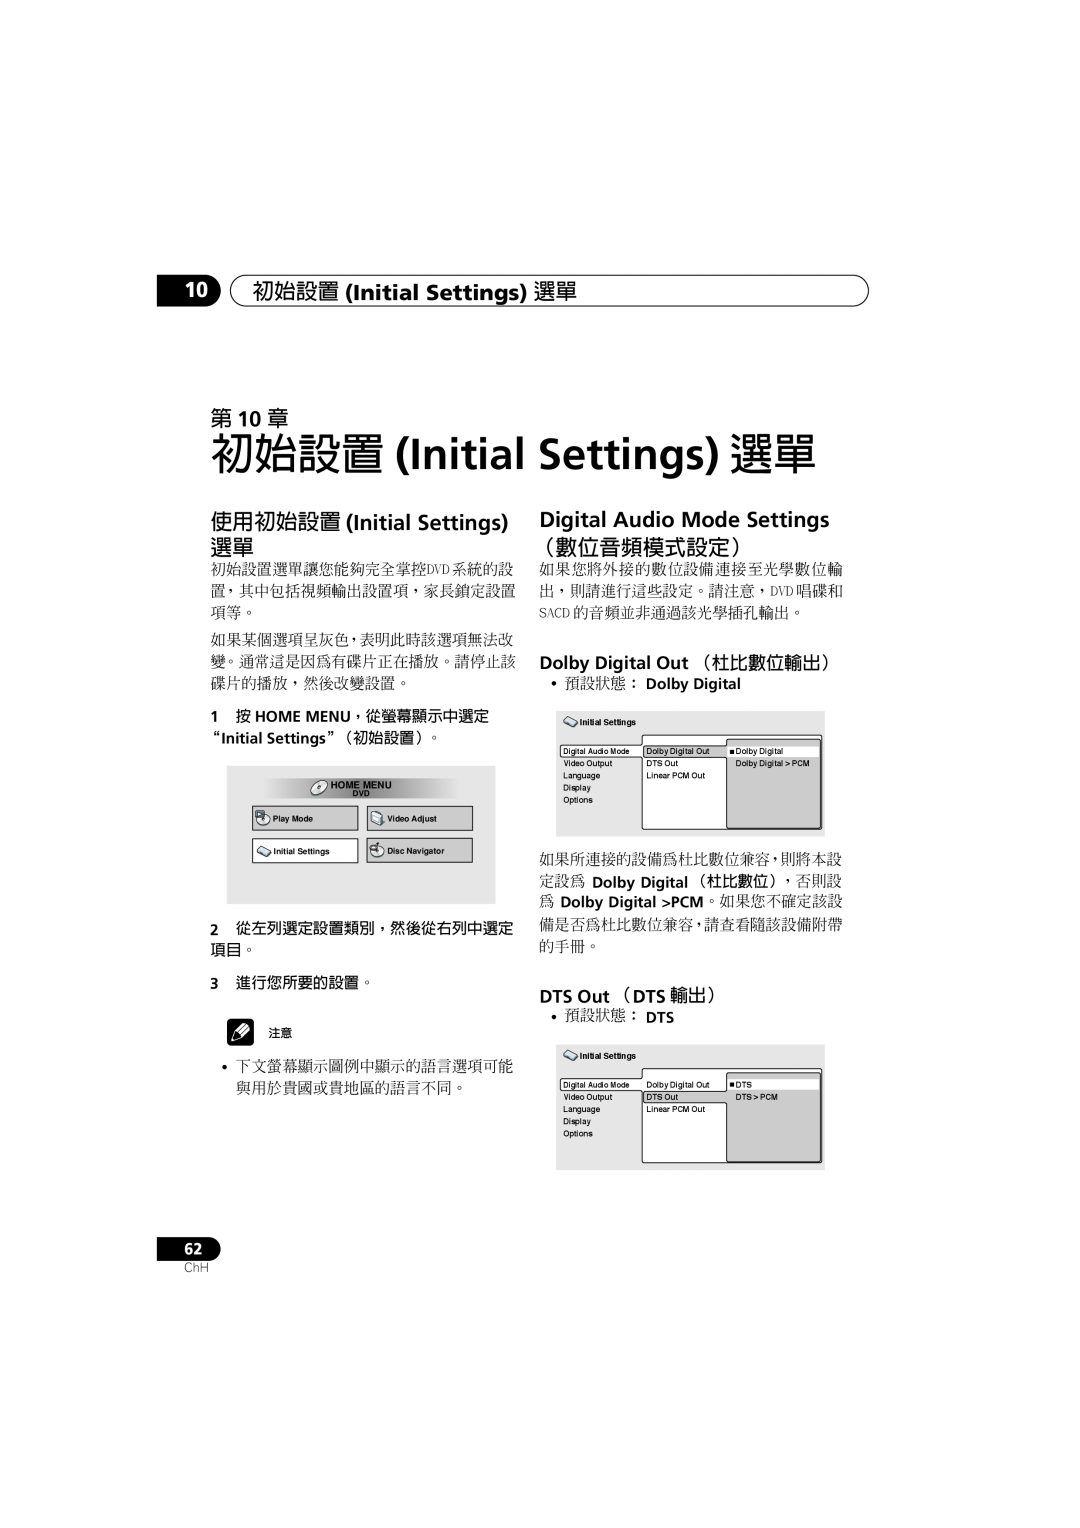 Pioneer XV-DV900 manual 10初始設置 Initial Settings 選單, 第 10 章, 使用初始設置 Initial Settings 選單, （數位音頻模式設定）, DTS Out （DTS 輸出） 